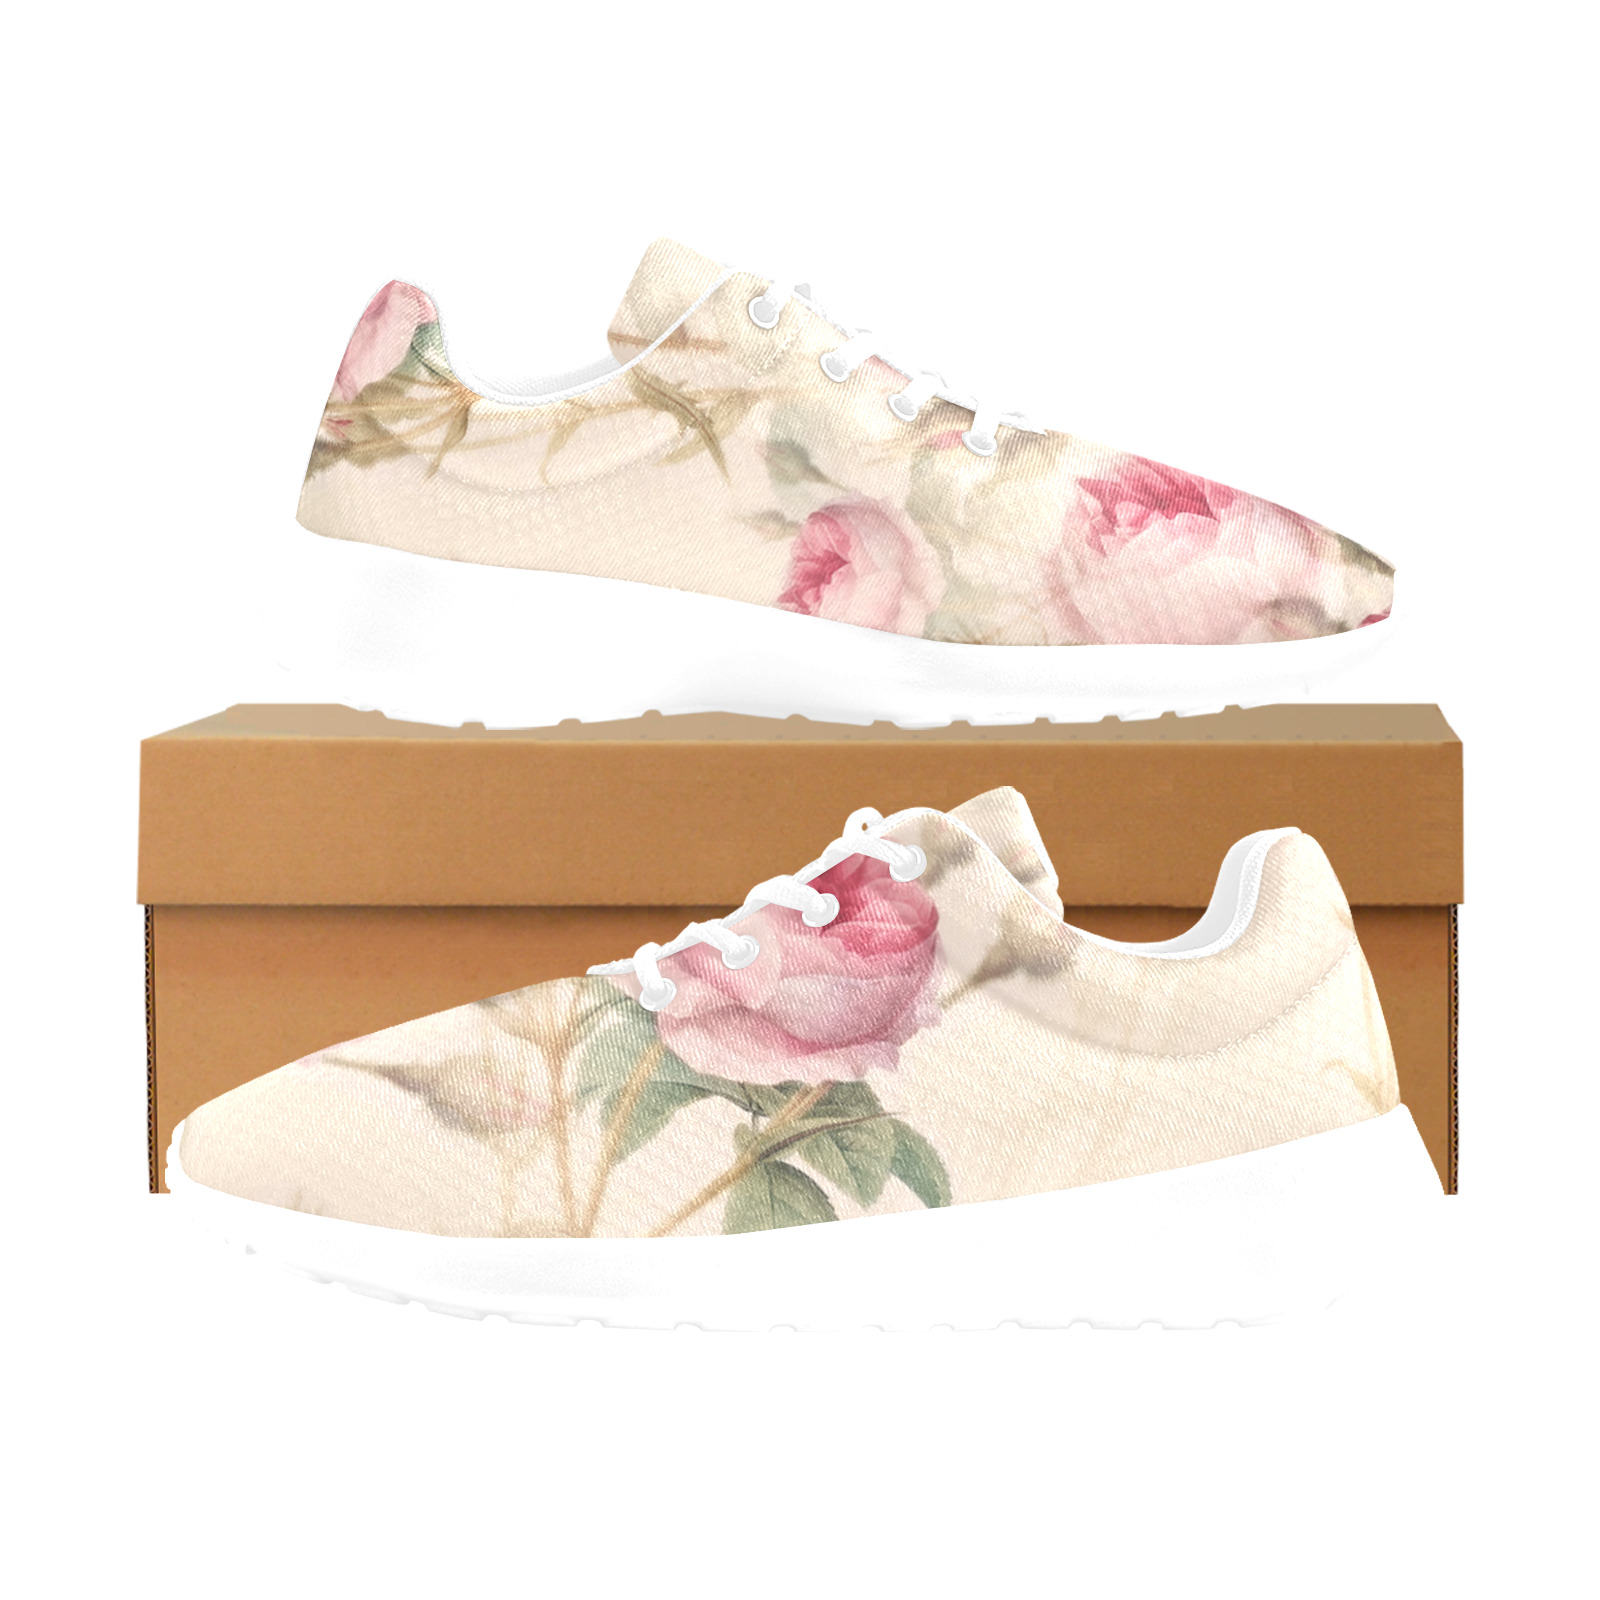 Vintage Pink Rose Garden Pattern Women's Athletic Shoes (Model 0200)